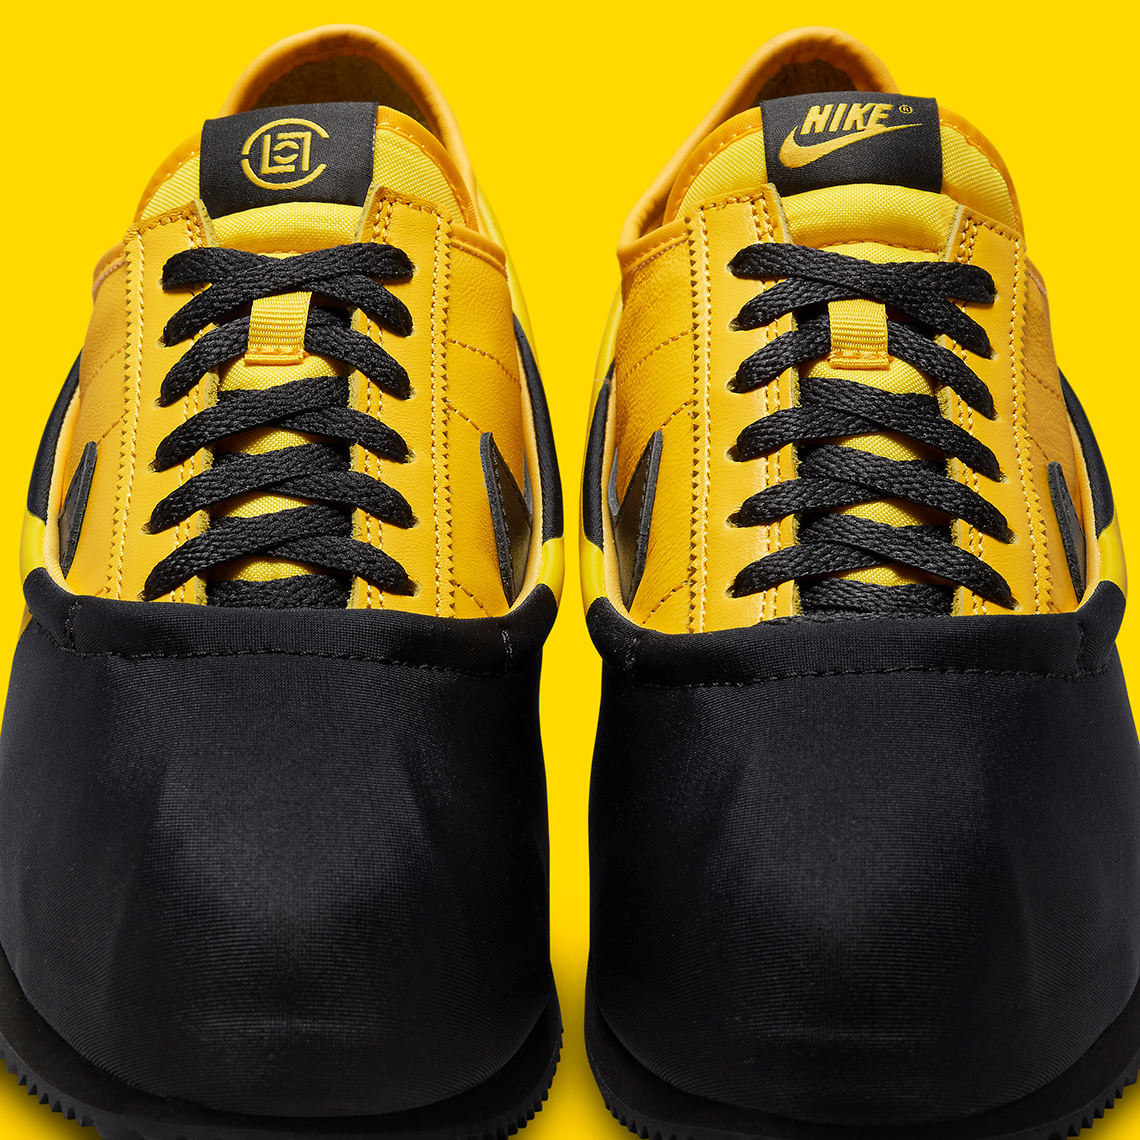 Clot Nike air Cortez Clotez Yellow Black Dz3239 001 5